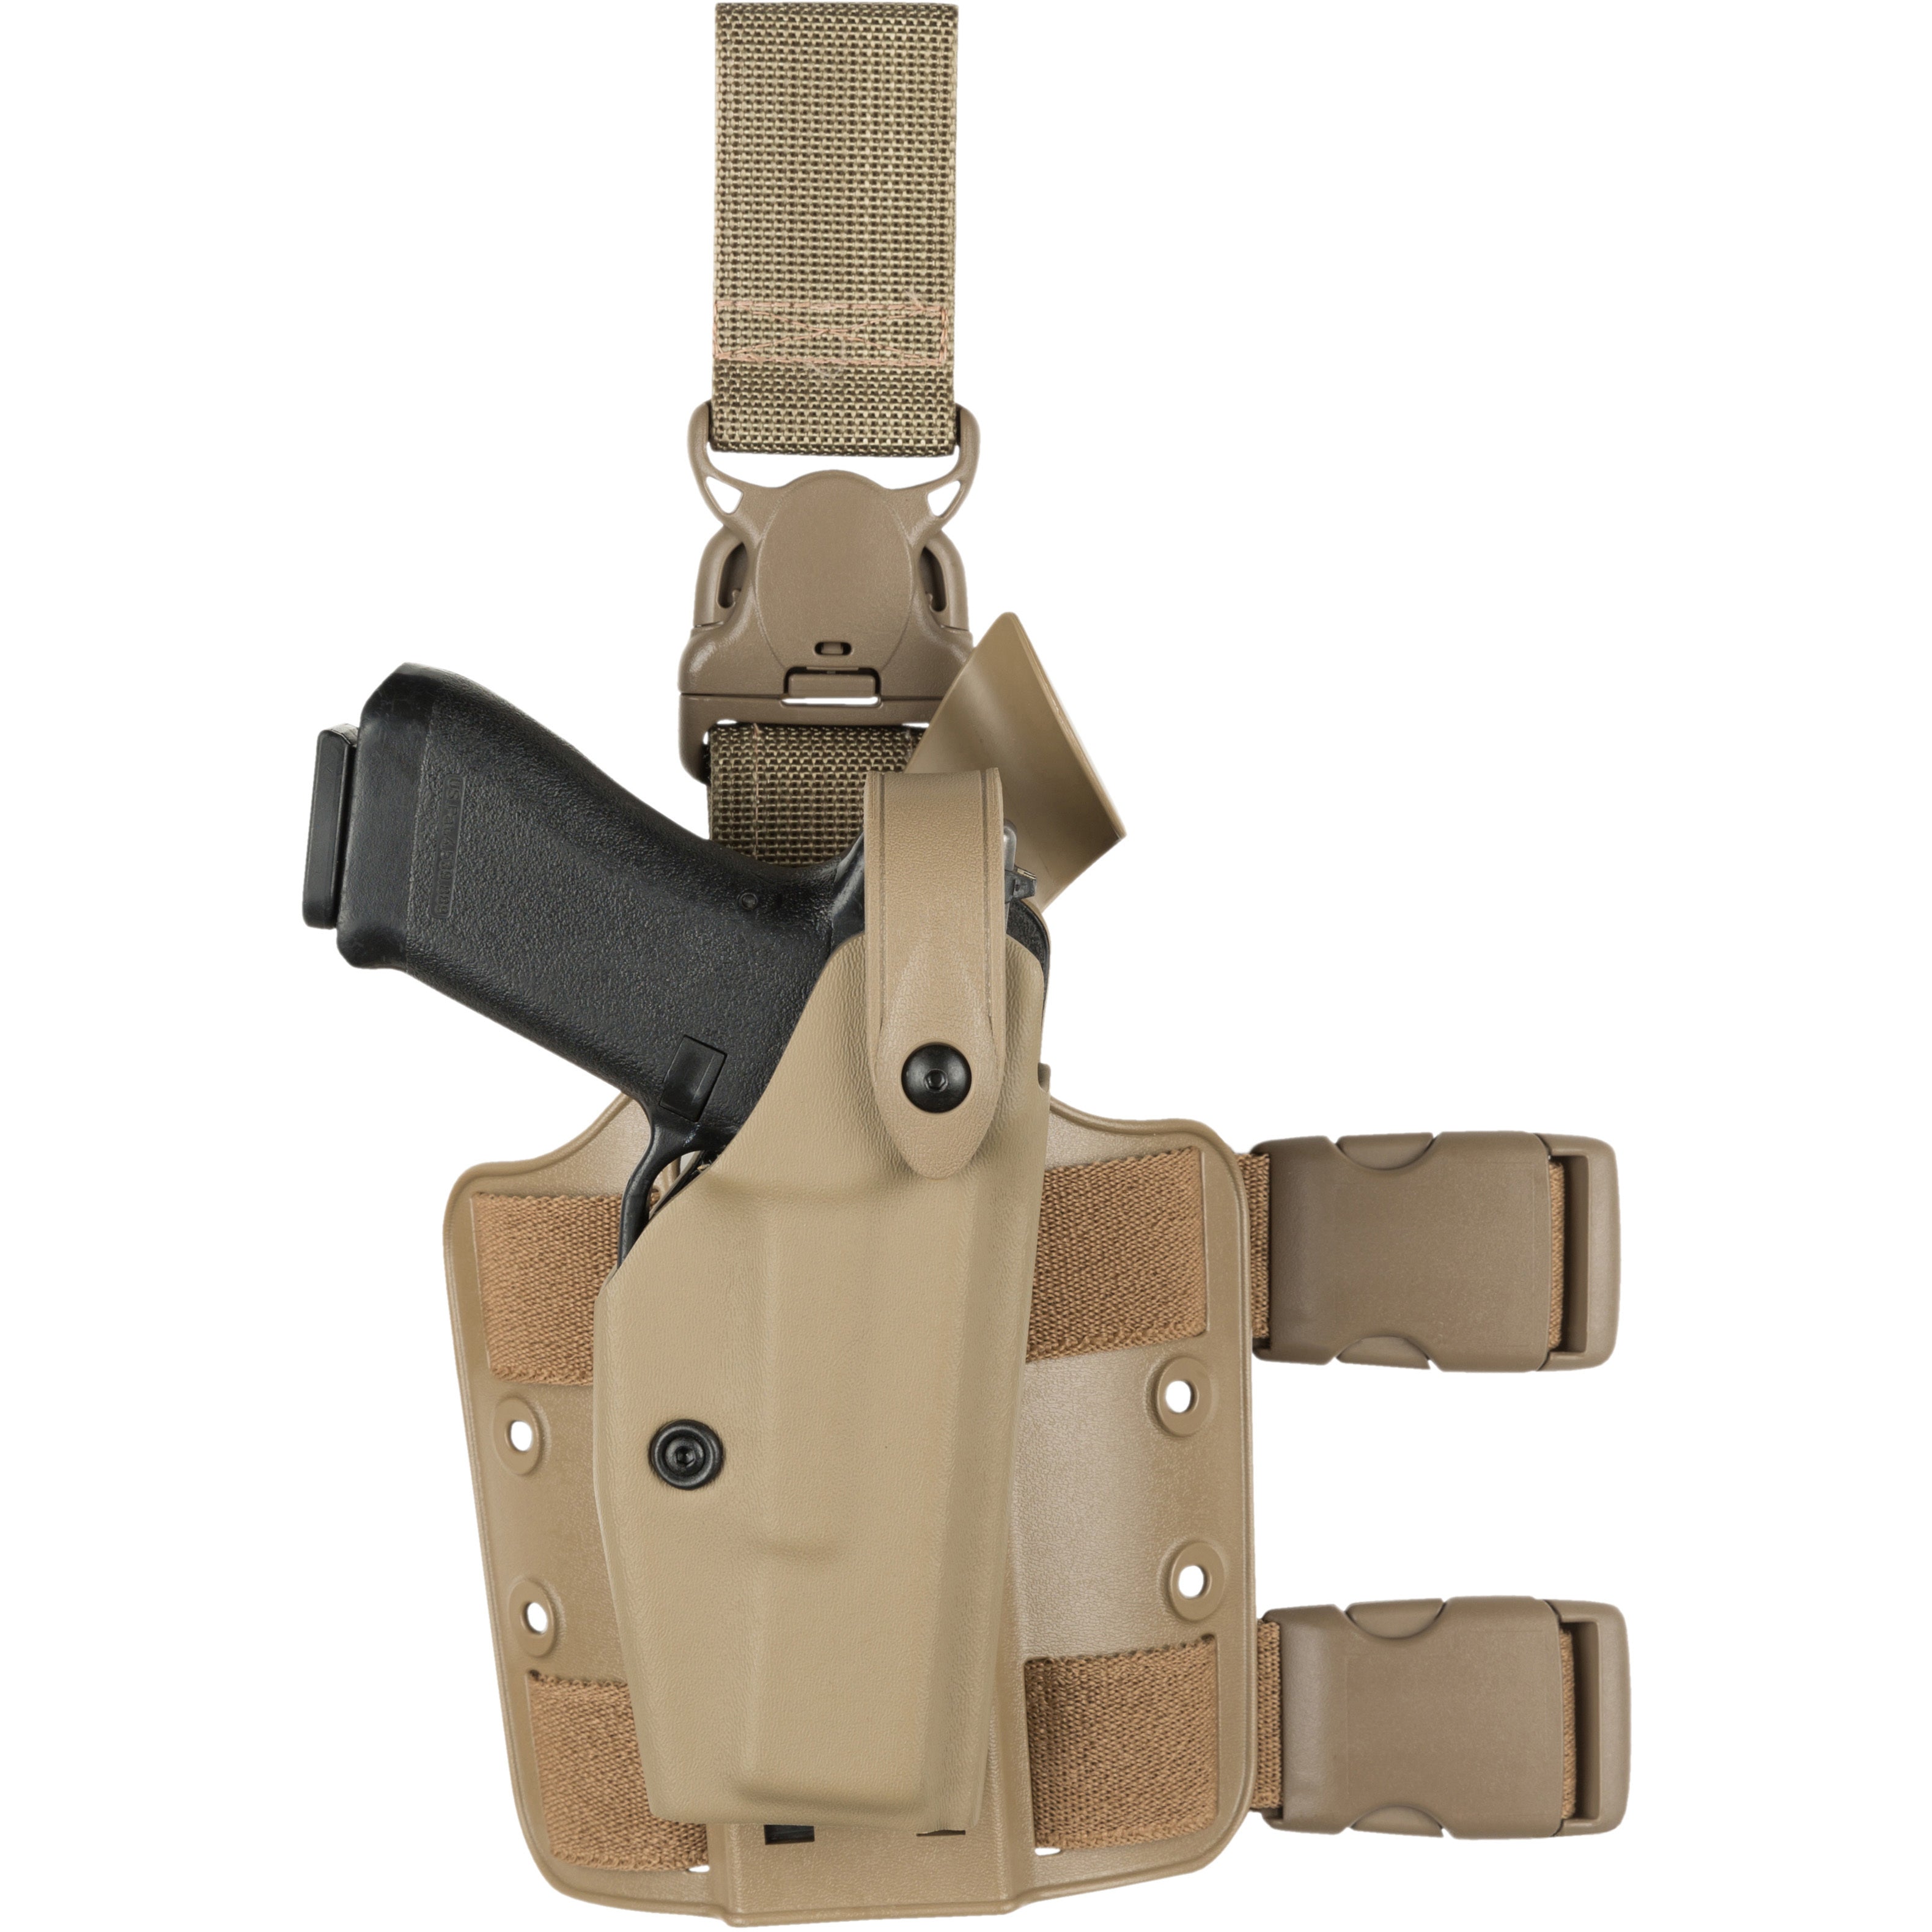 Model 6005 SLS Tactical Quick-Release Leg Strap Holster | Safariland